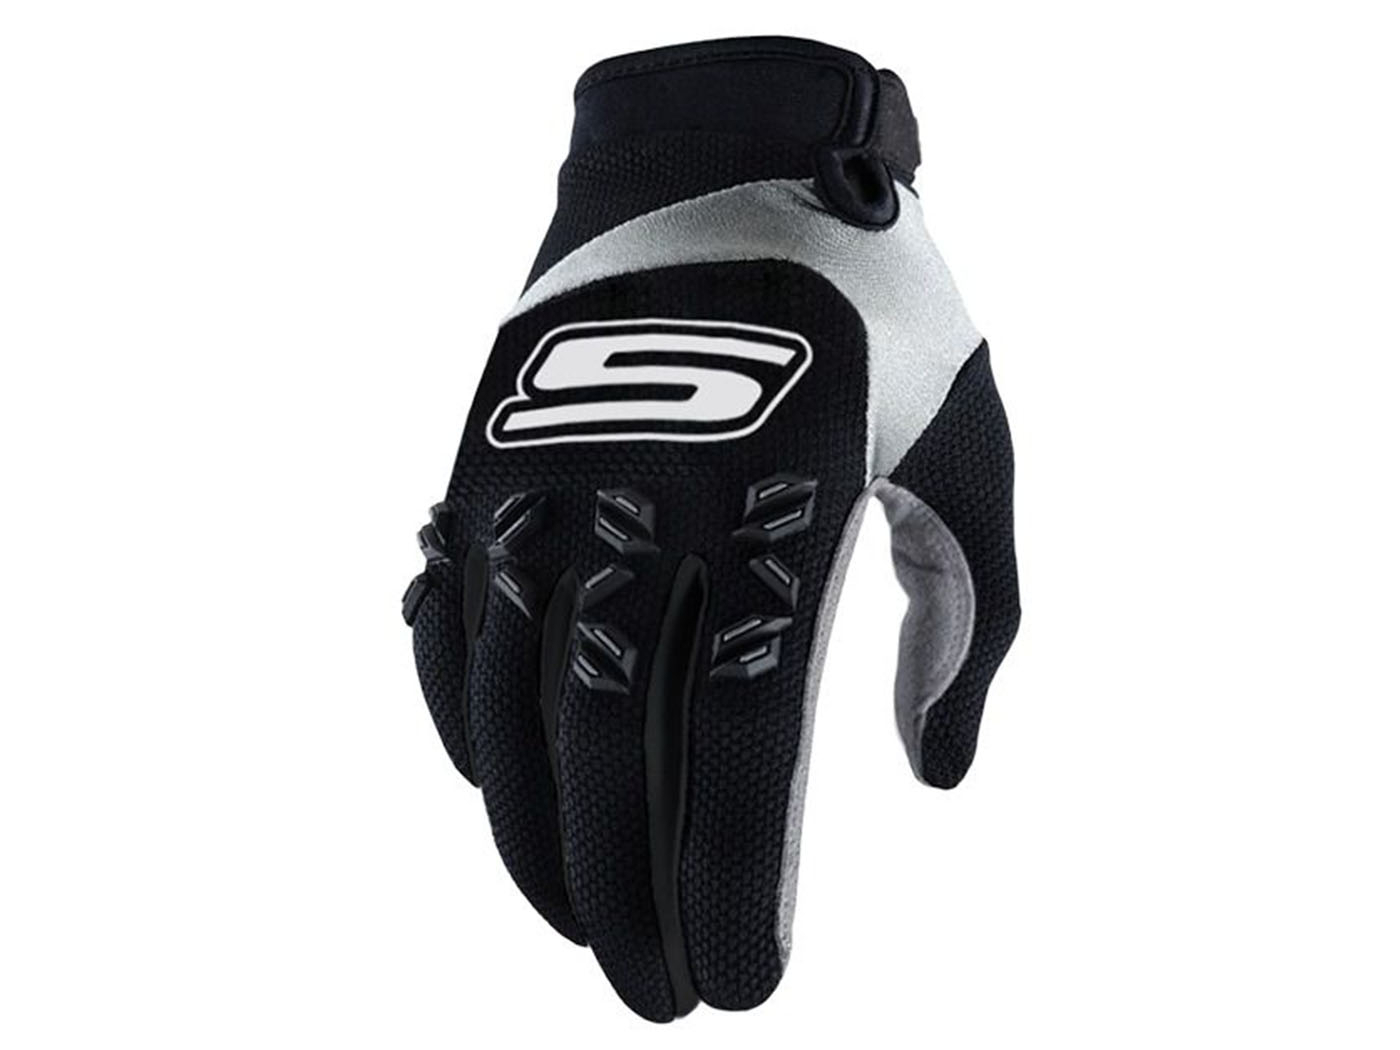 MX Gloves S-Line Homologated, Black / White - Size L